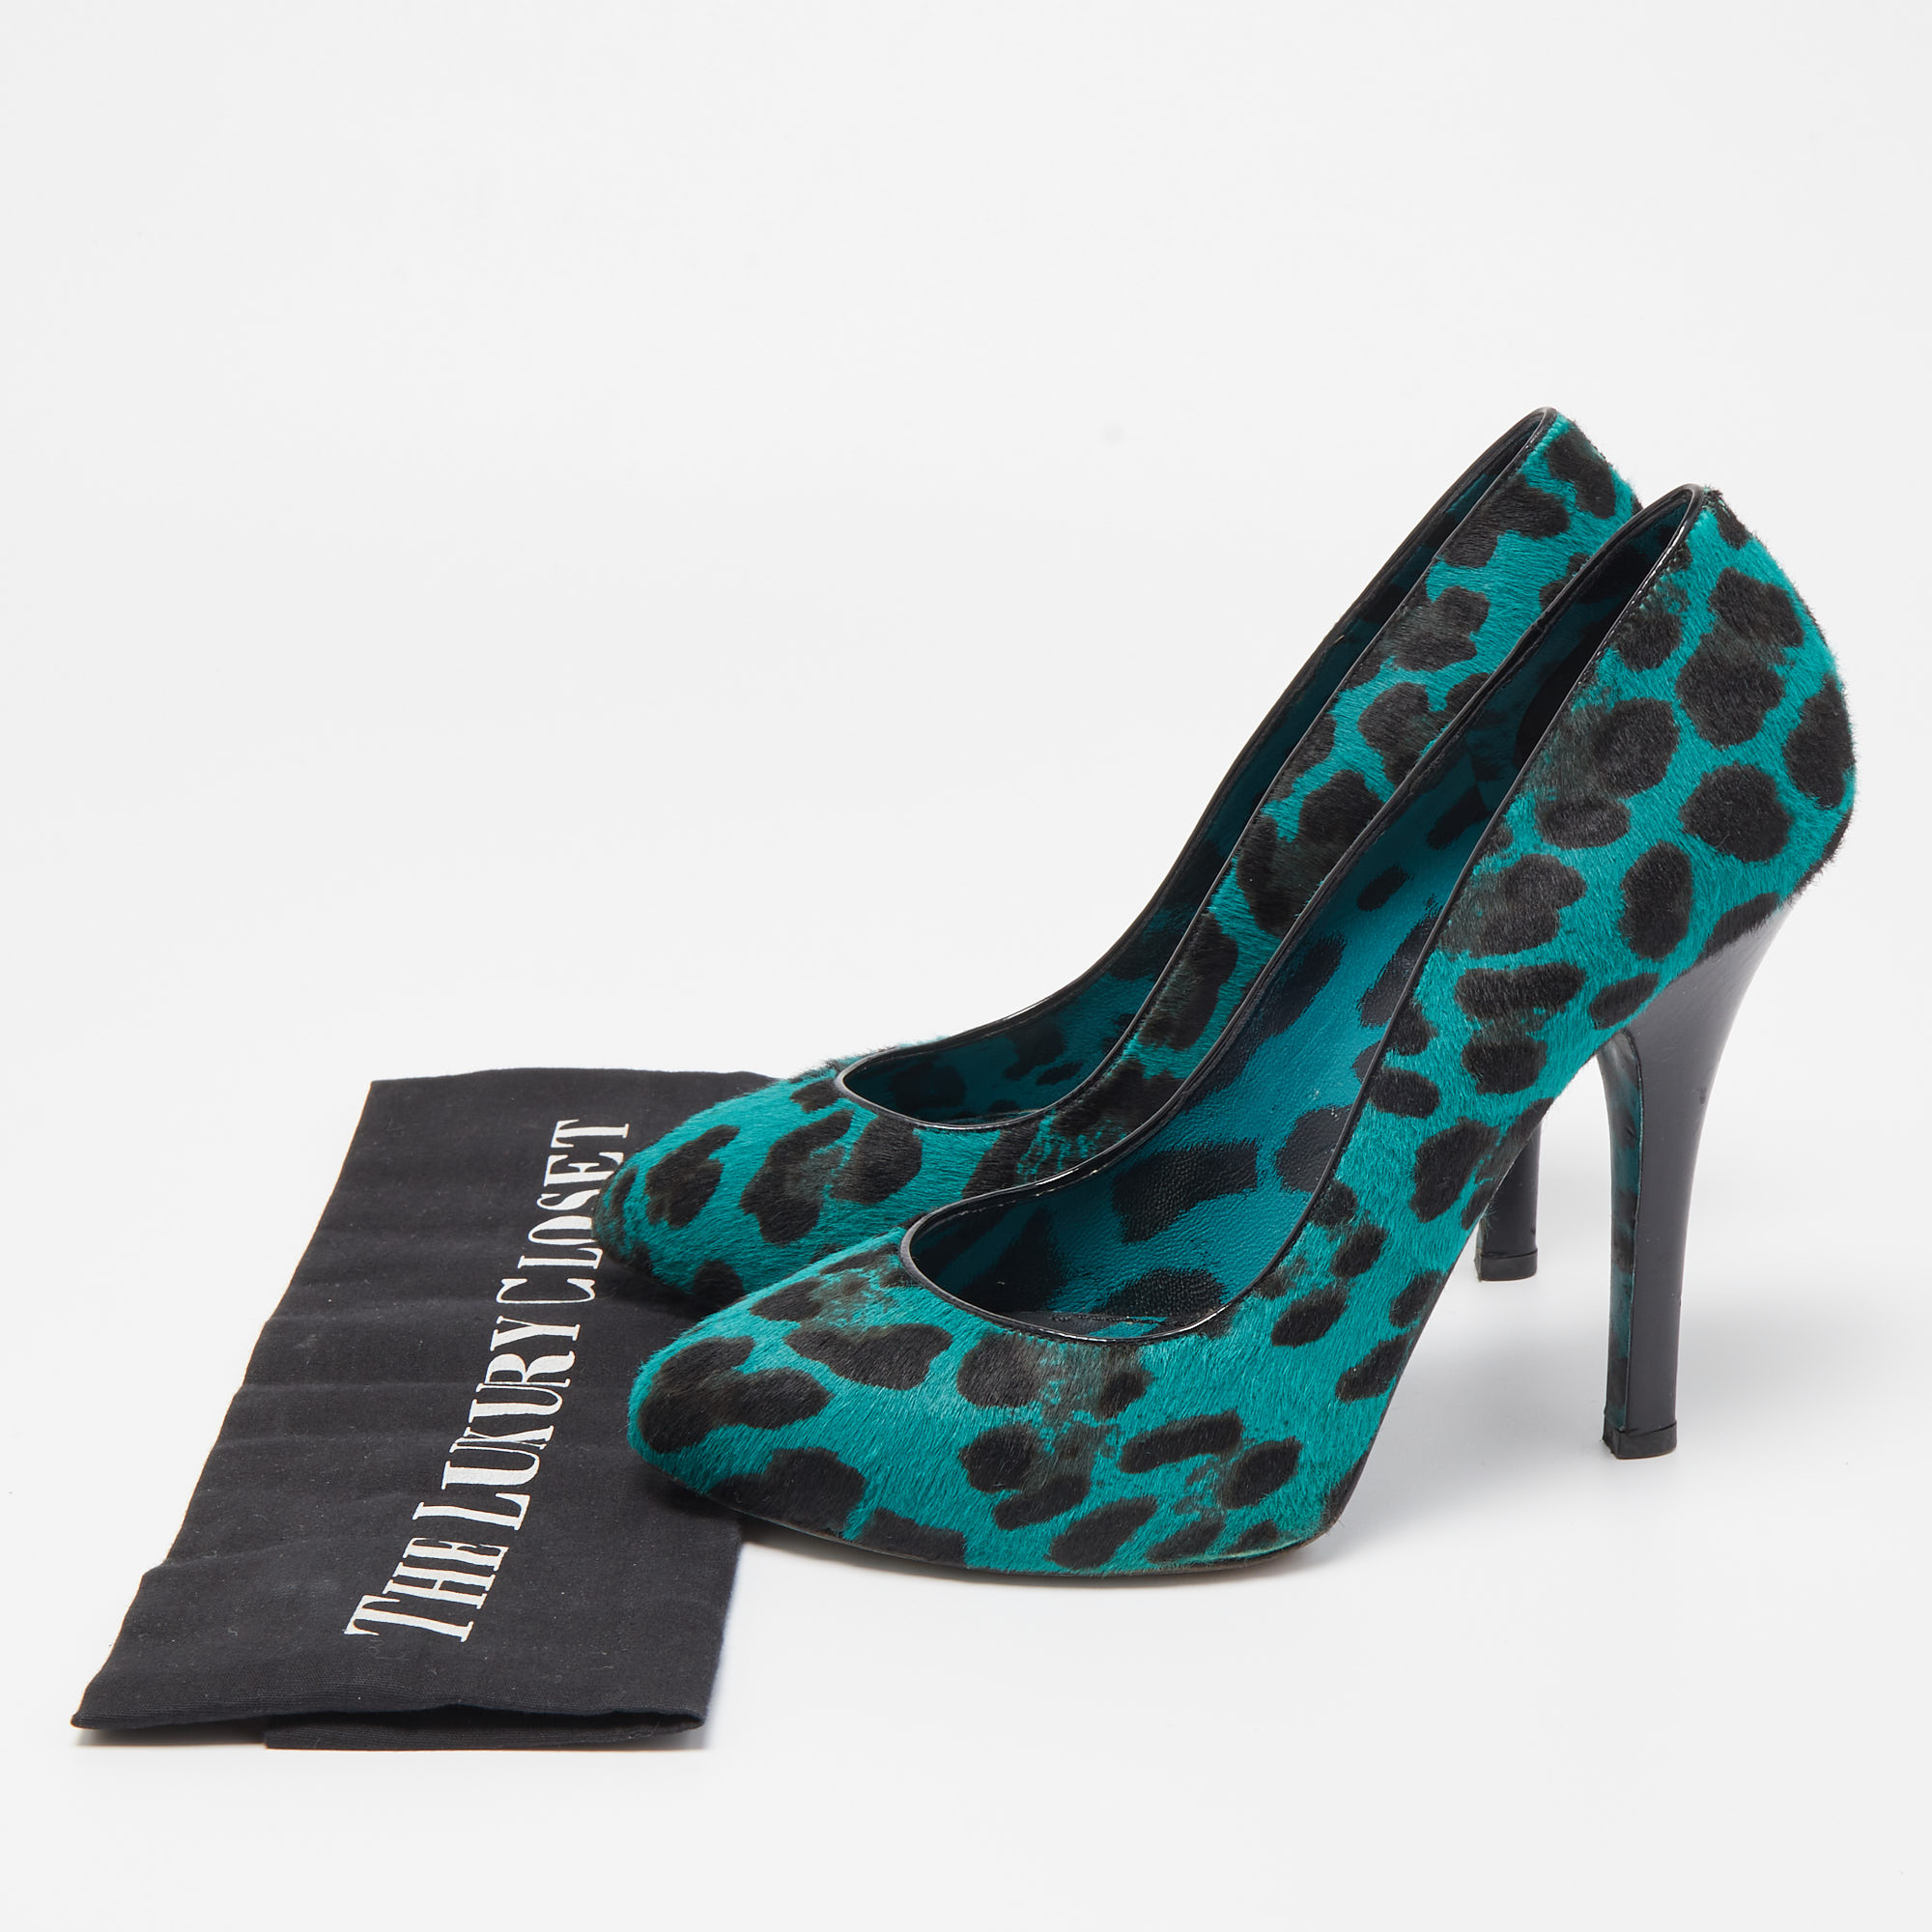 Dolce & Gabbana Green/Black Calf Hair Pointed Toe Pumps Size 38.5